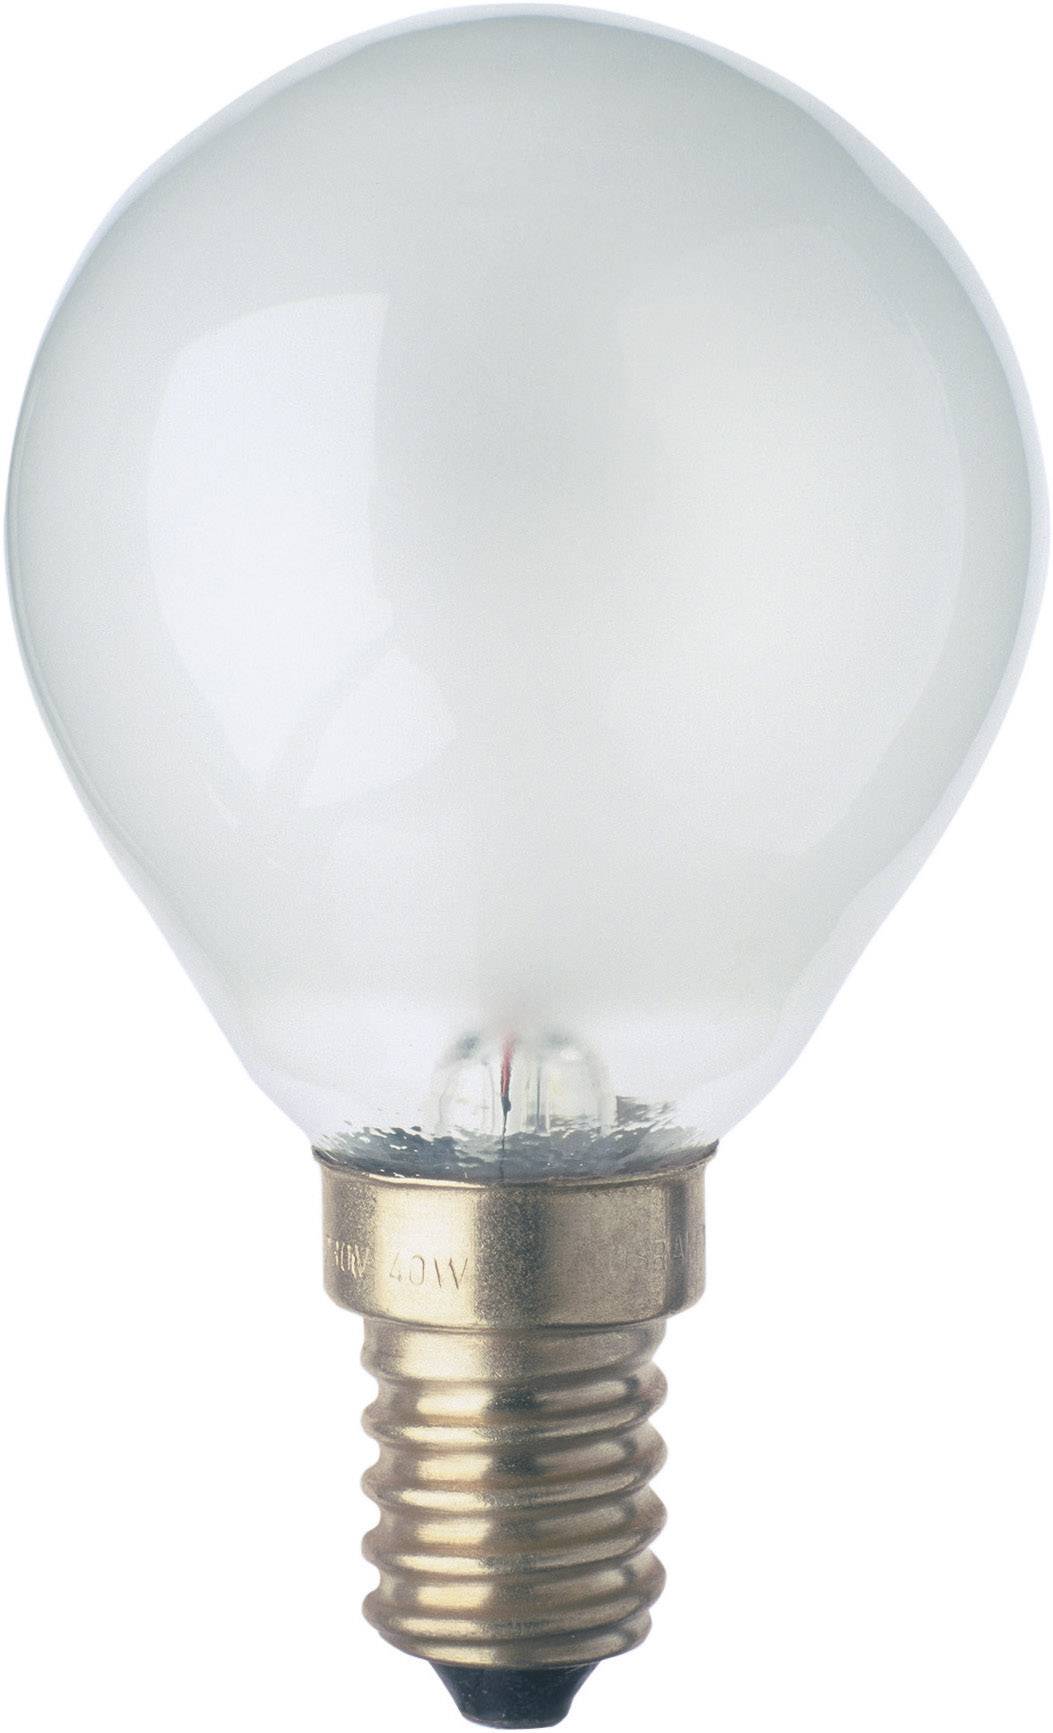 Philips Backofenlampe Glühbirne Glühlampe Backofen 15W E14 Backofenglühbirne 15